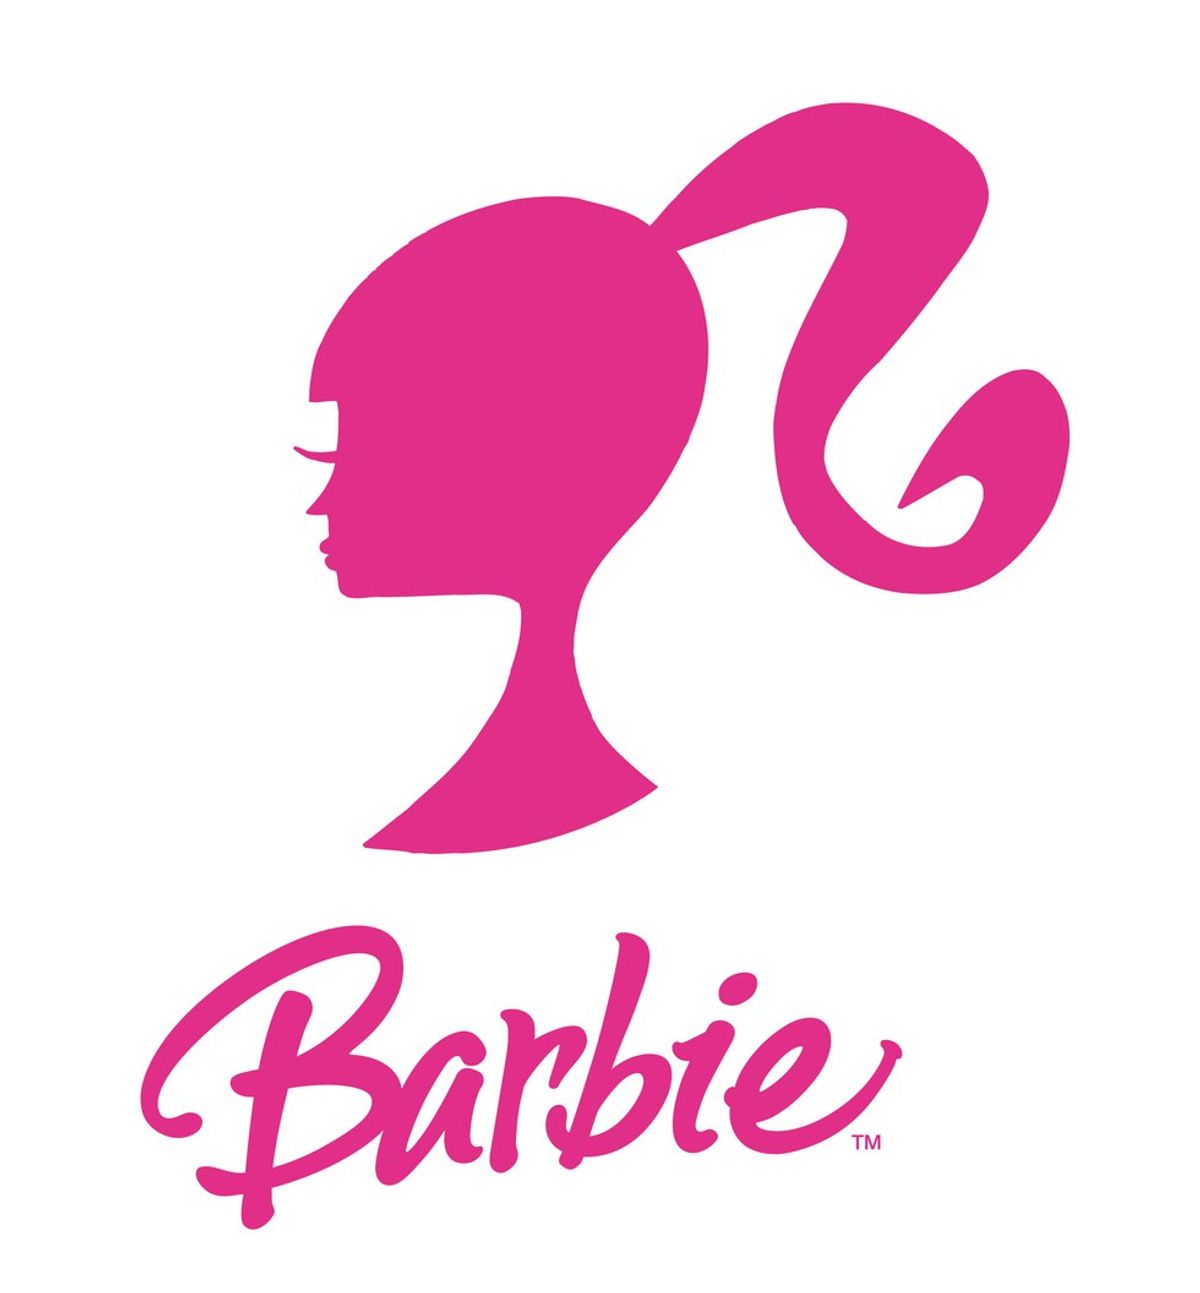 Barbie's New Look